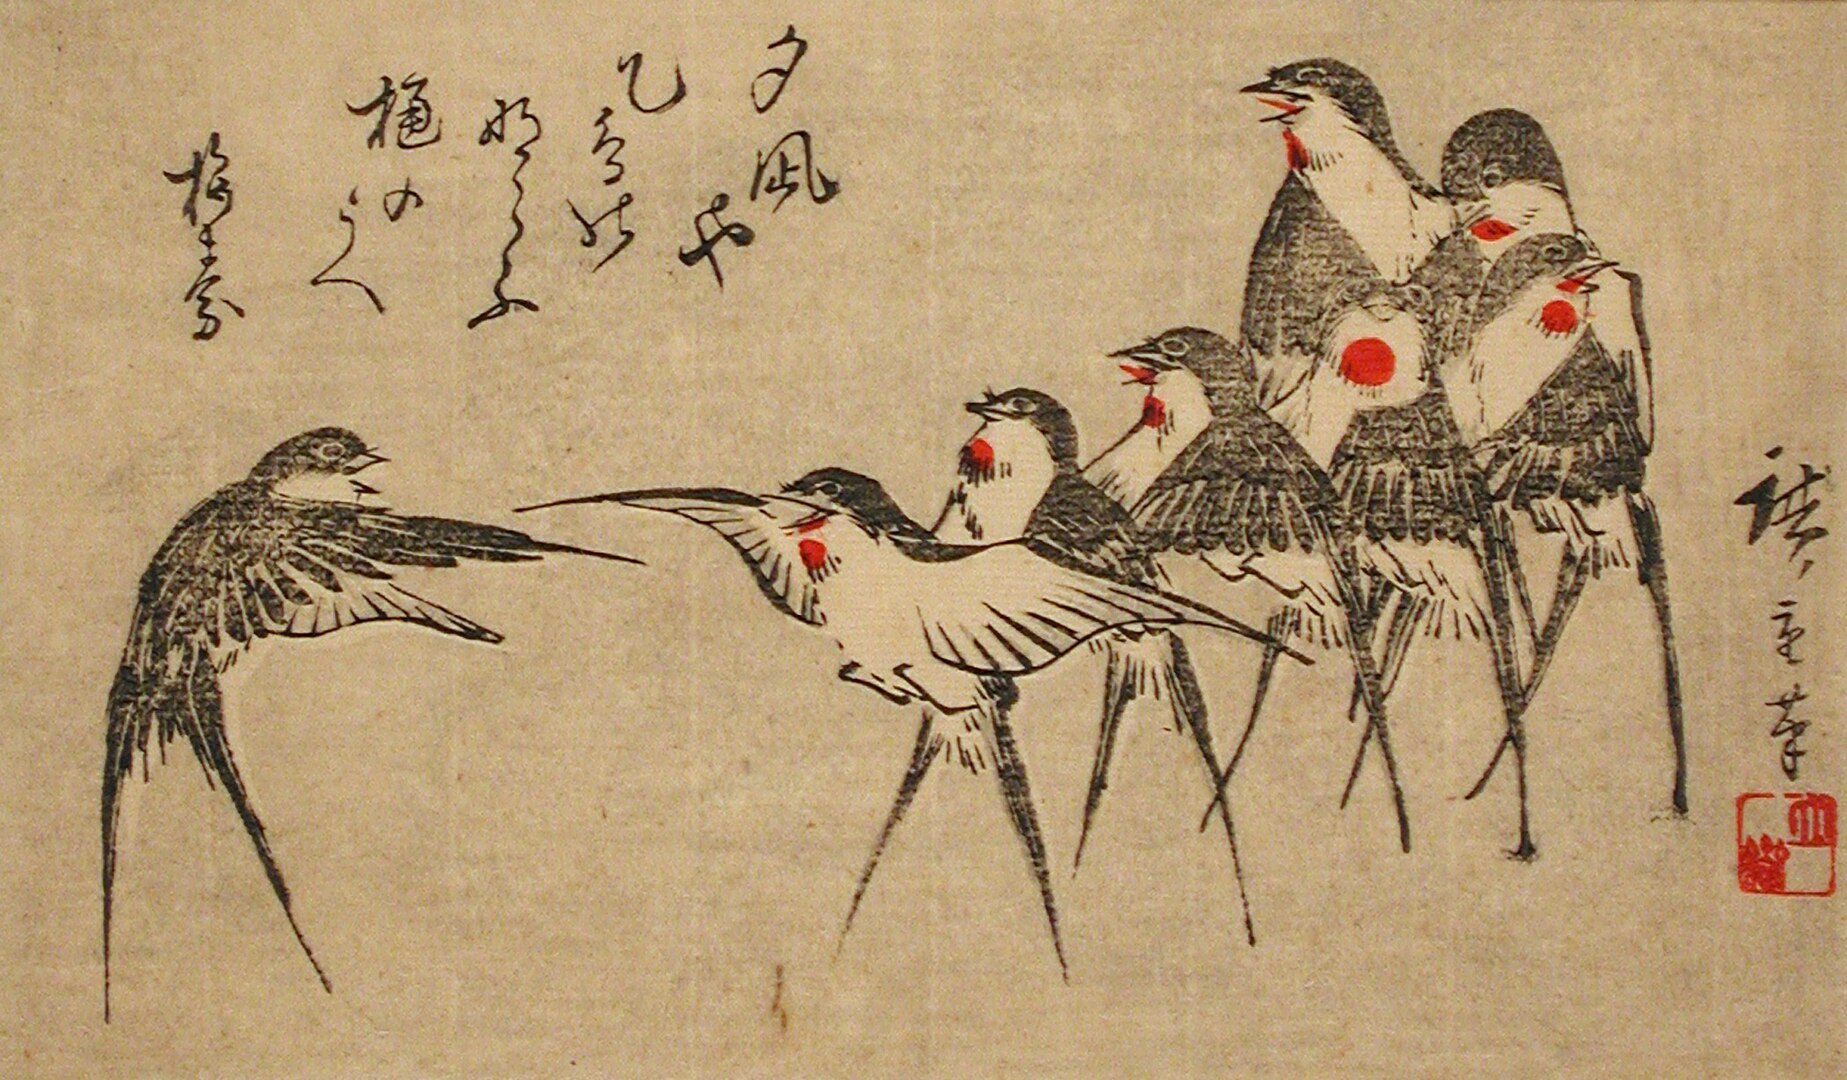 An illustration of birds